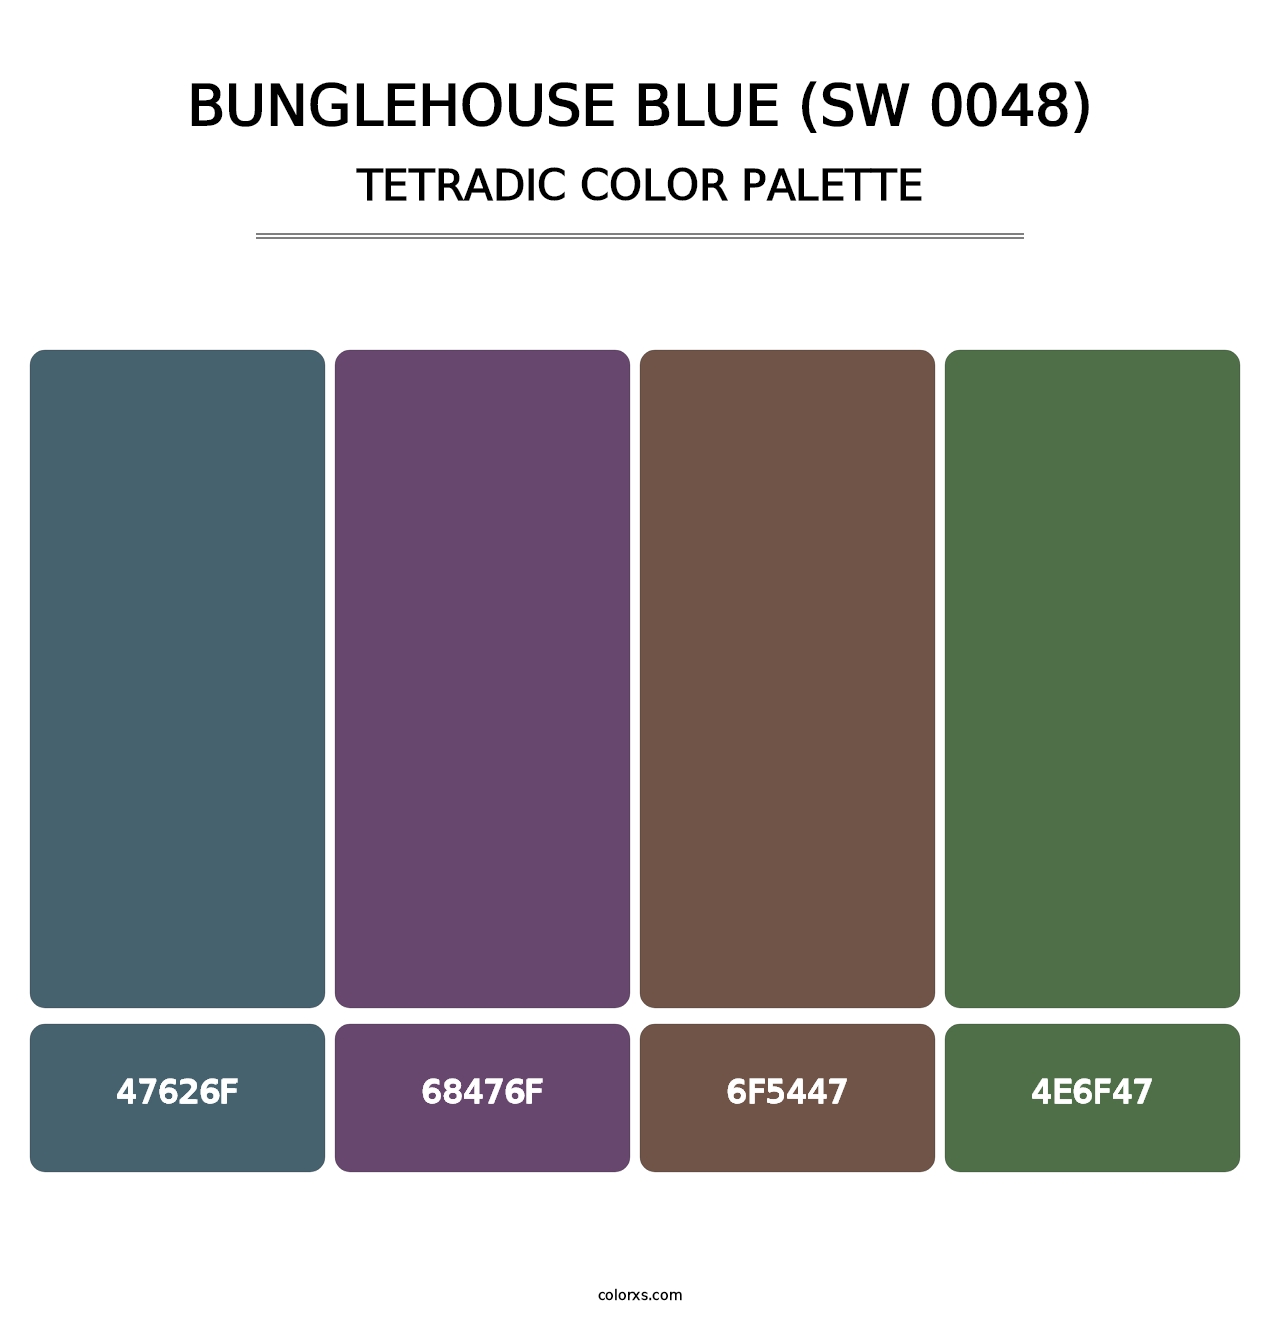 Bunglehouse Blue (SW 0048) - Tetradic Color Palette